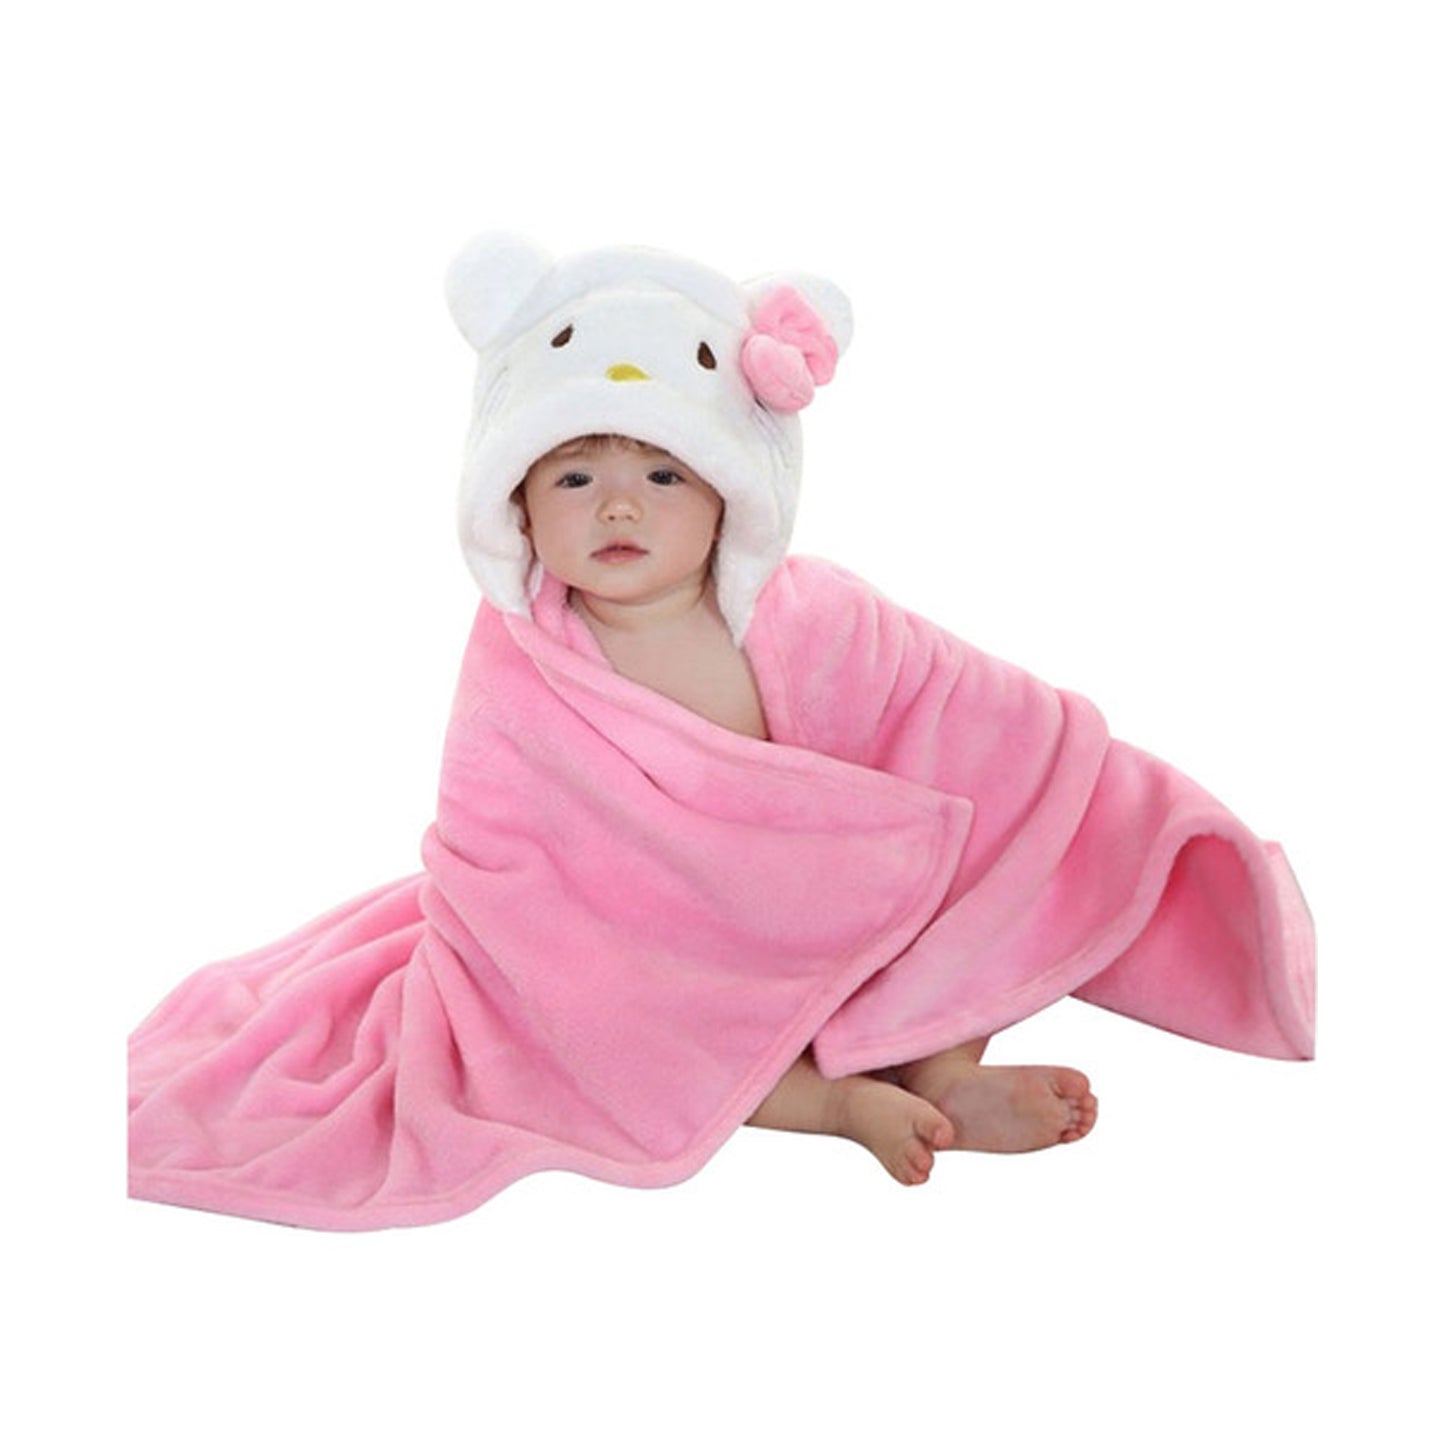 Hello Kitty Hooded Towel